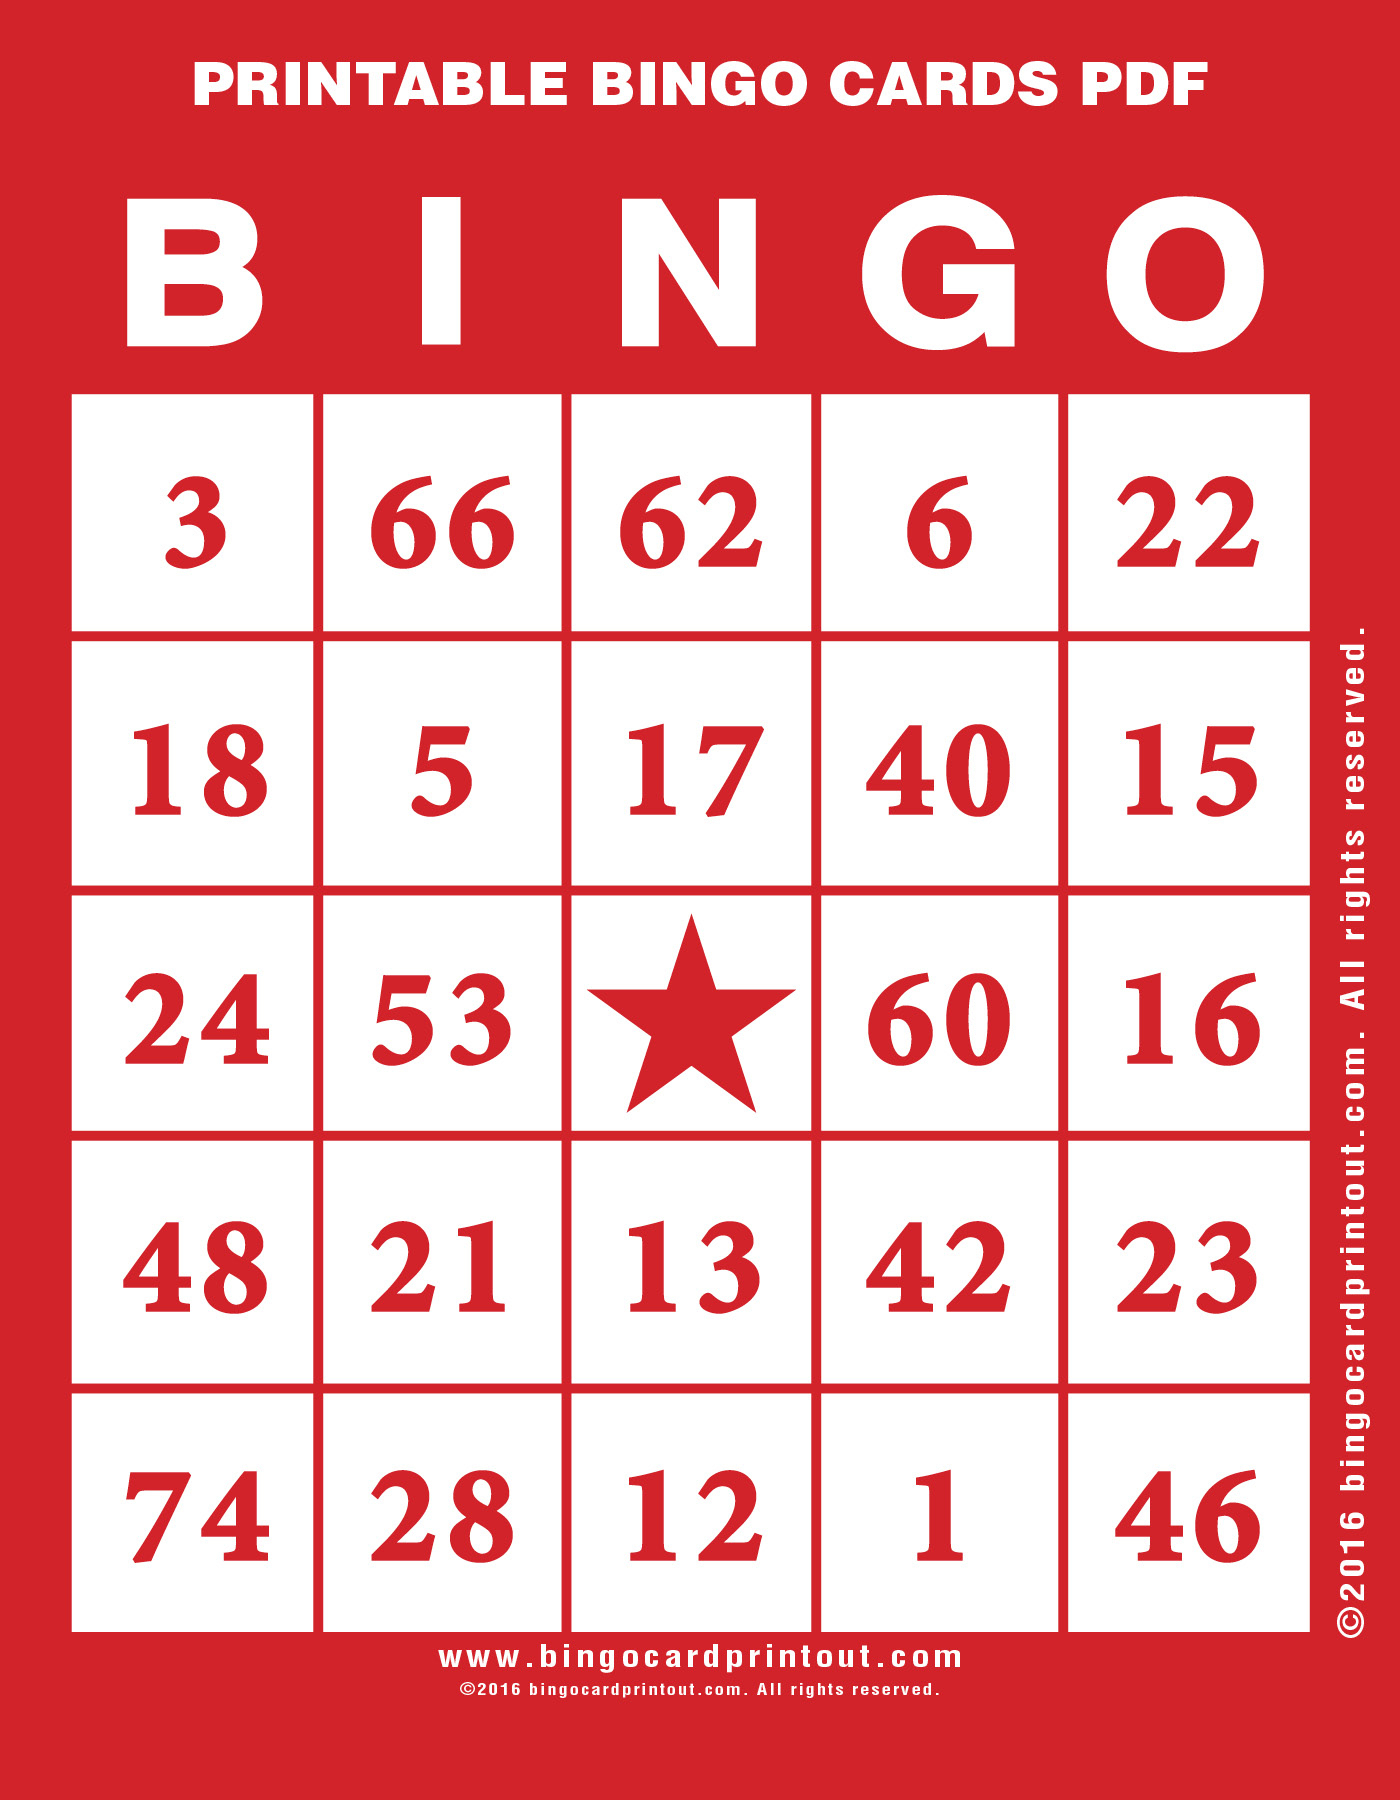 Printable Bingo Cards Pdf - Bingocardprintout